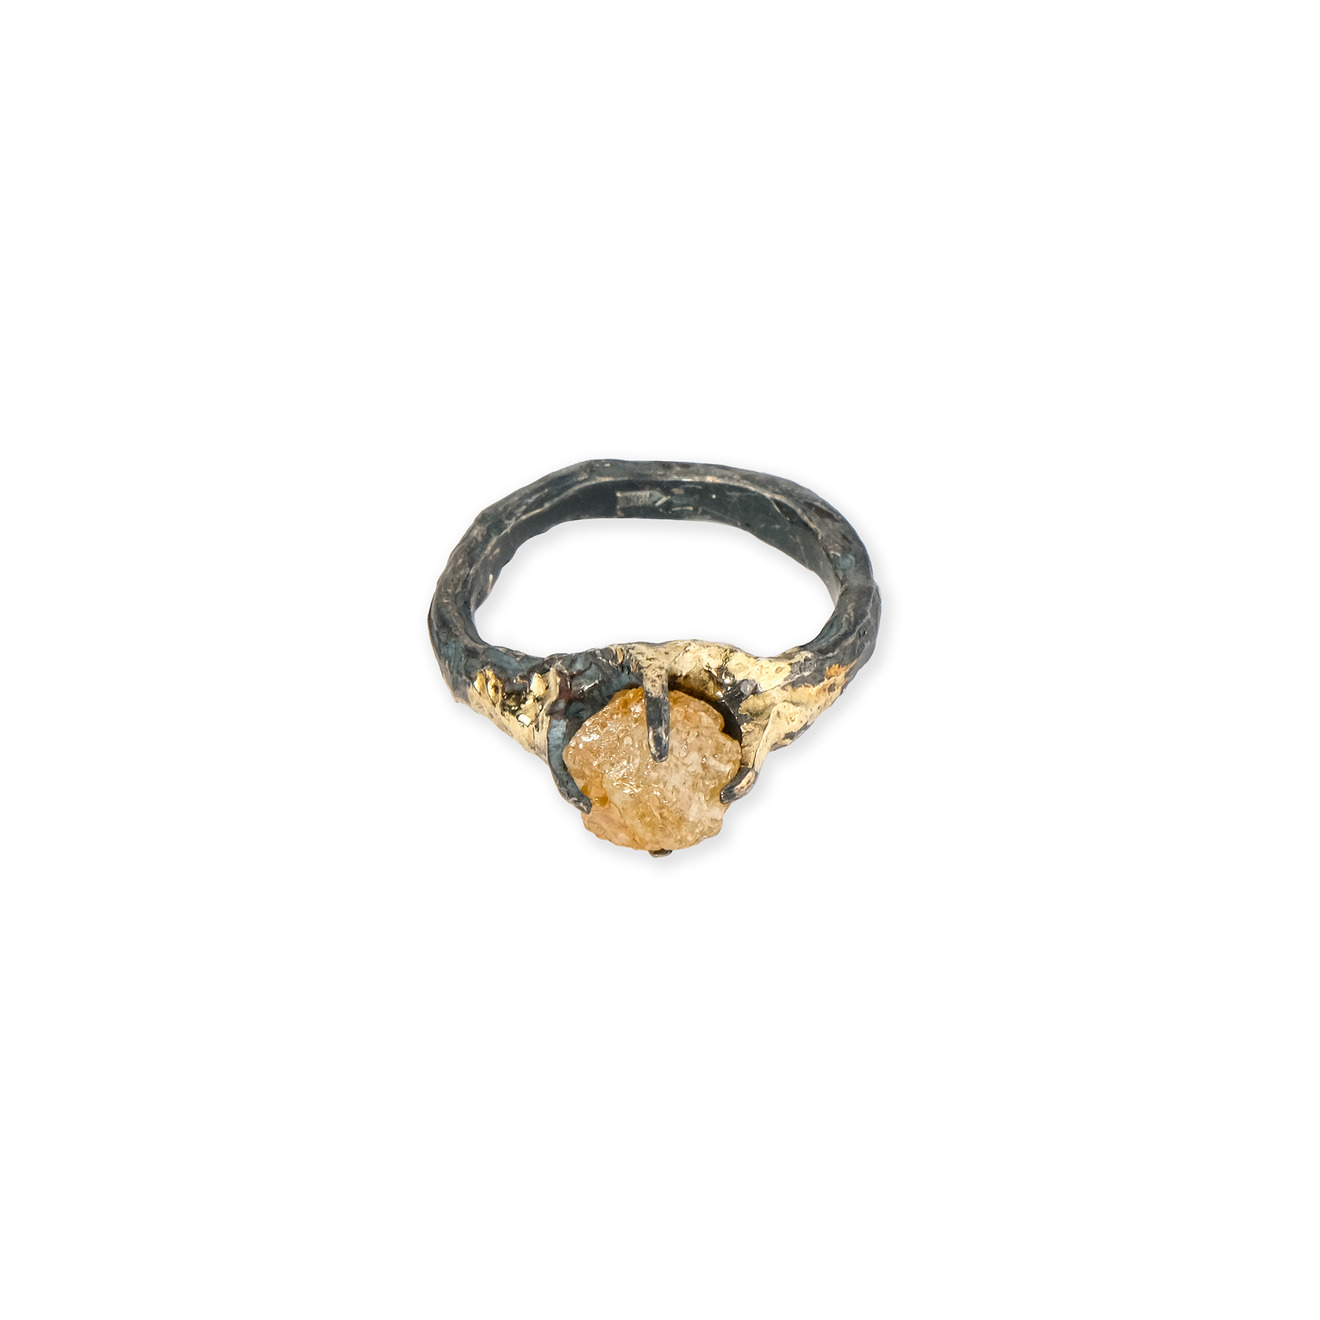 Kintsugi Jewelry Кольцо Wild power из серебра с позолотой и кристаллом кварца фотографии